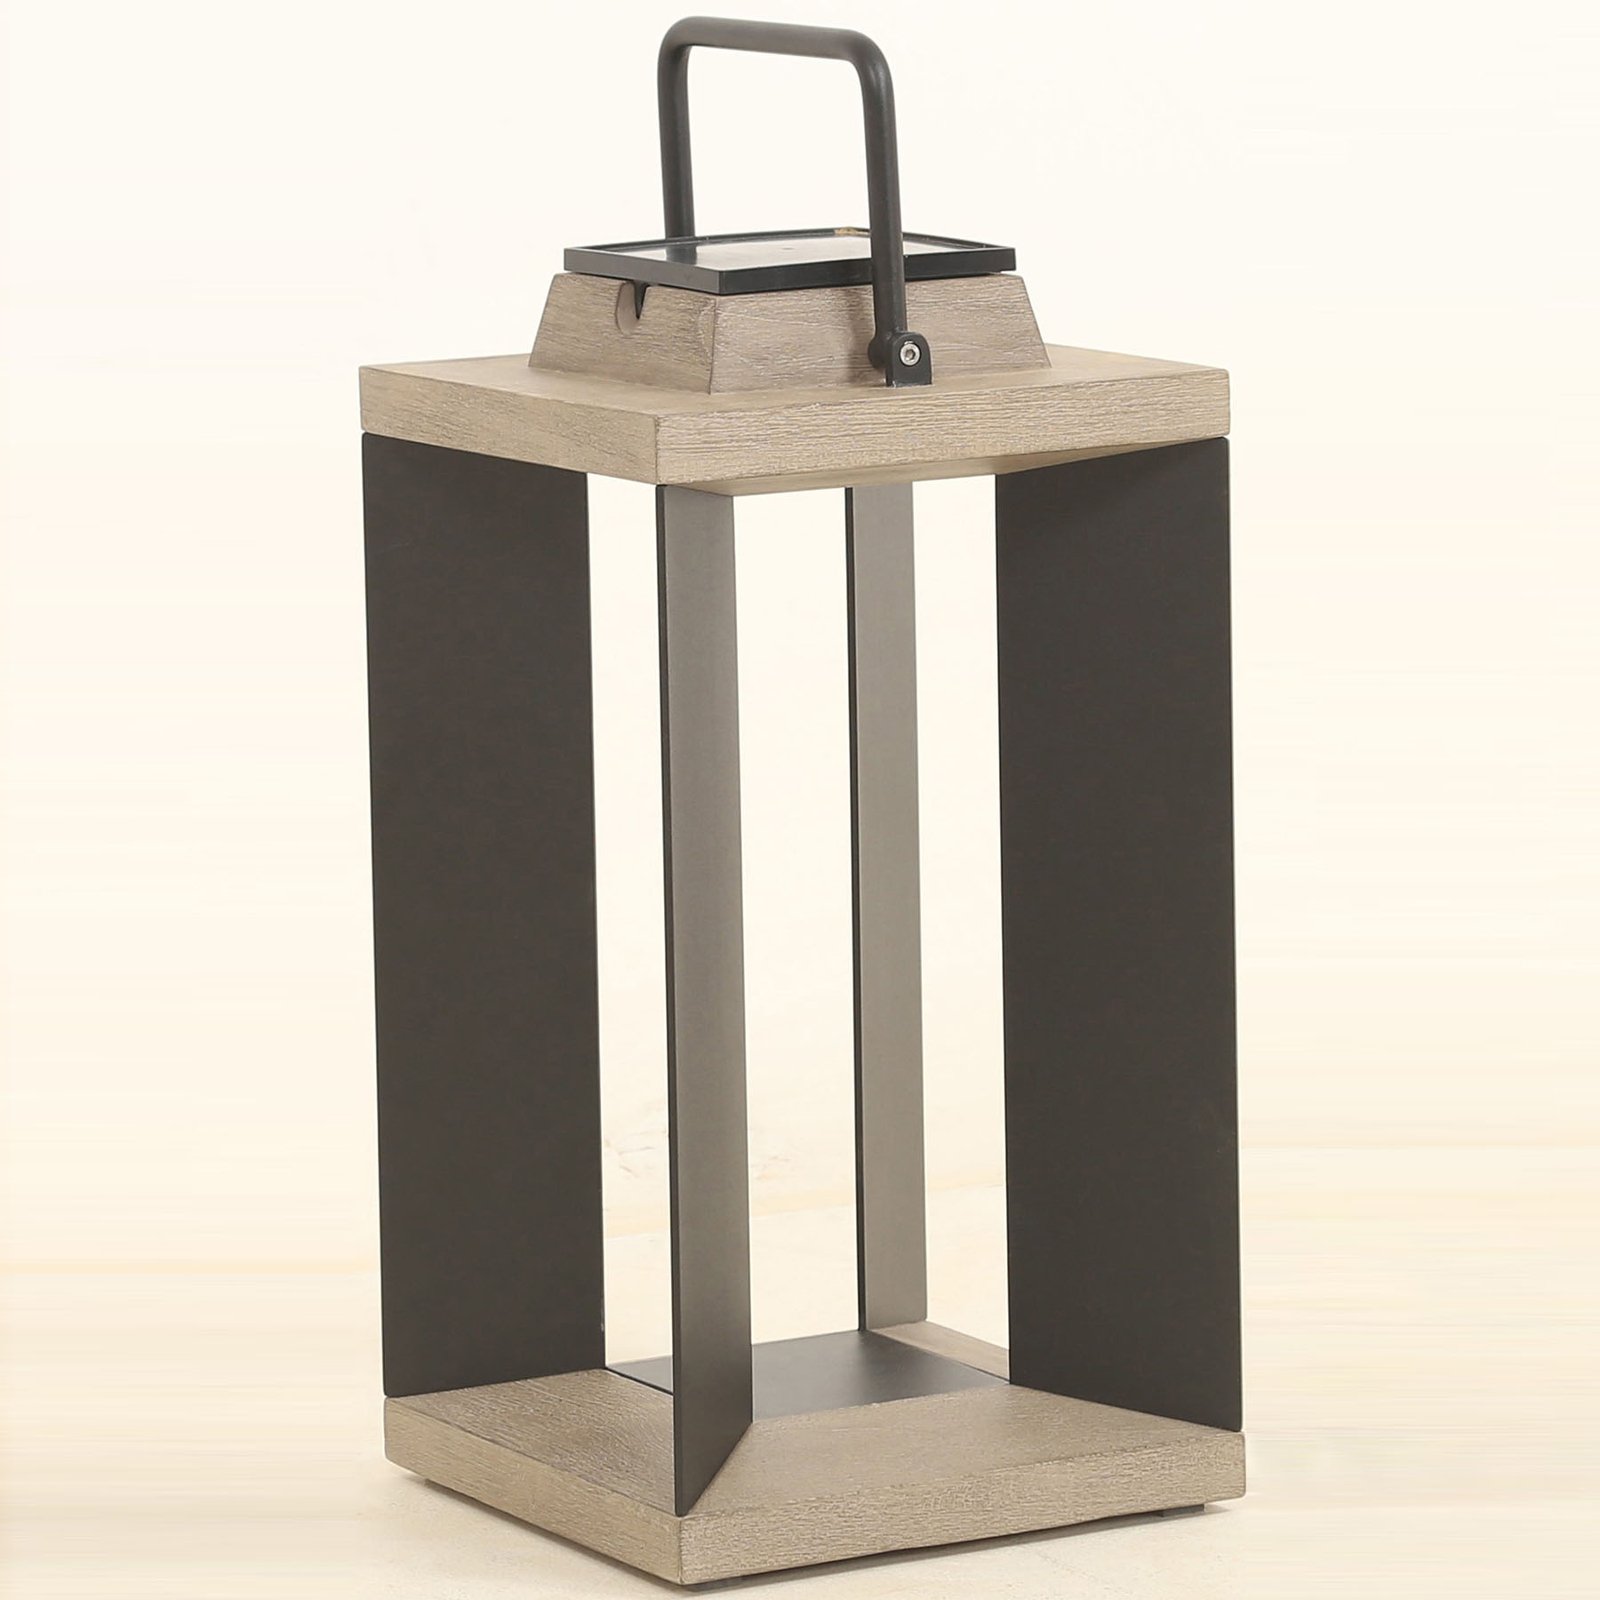 Teckalu solar lantern, Duratek/aluminium black, 45.5cm